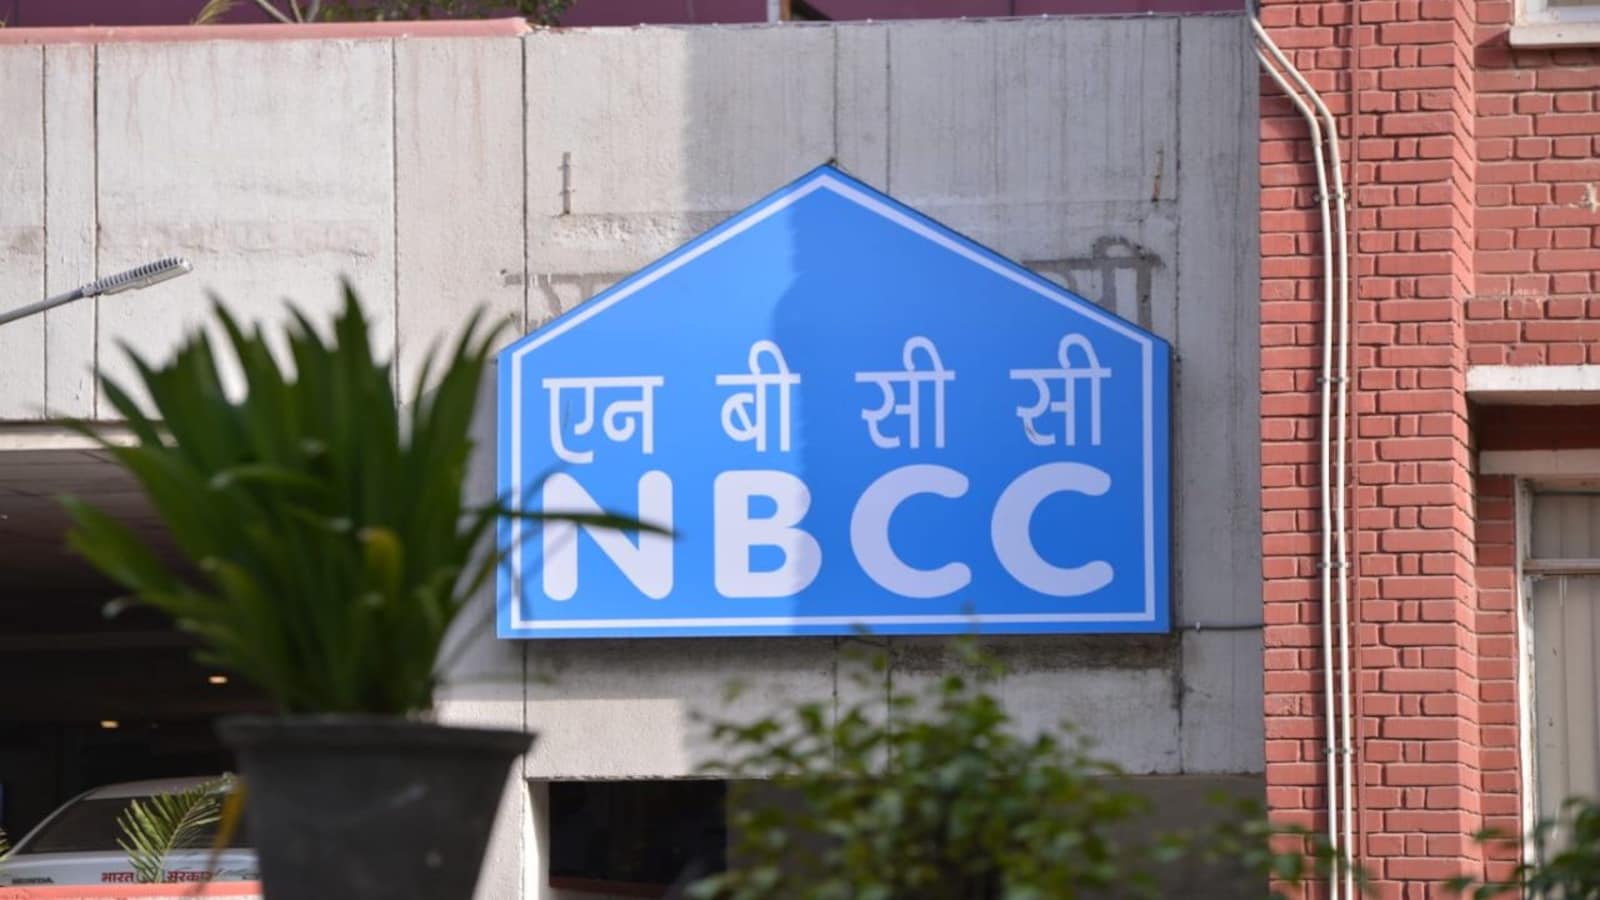 Weak execution and delay in asset monetisation nags NBCC investors despite  recent order wins